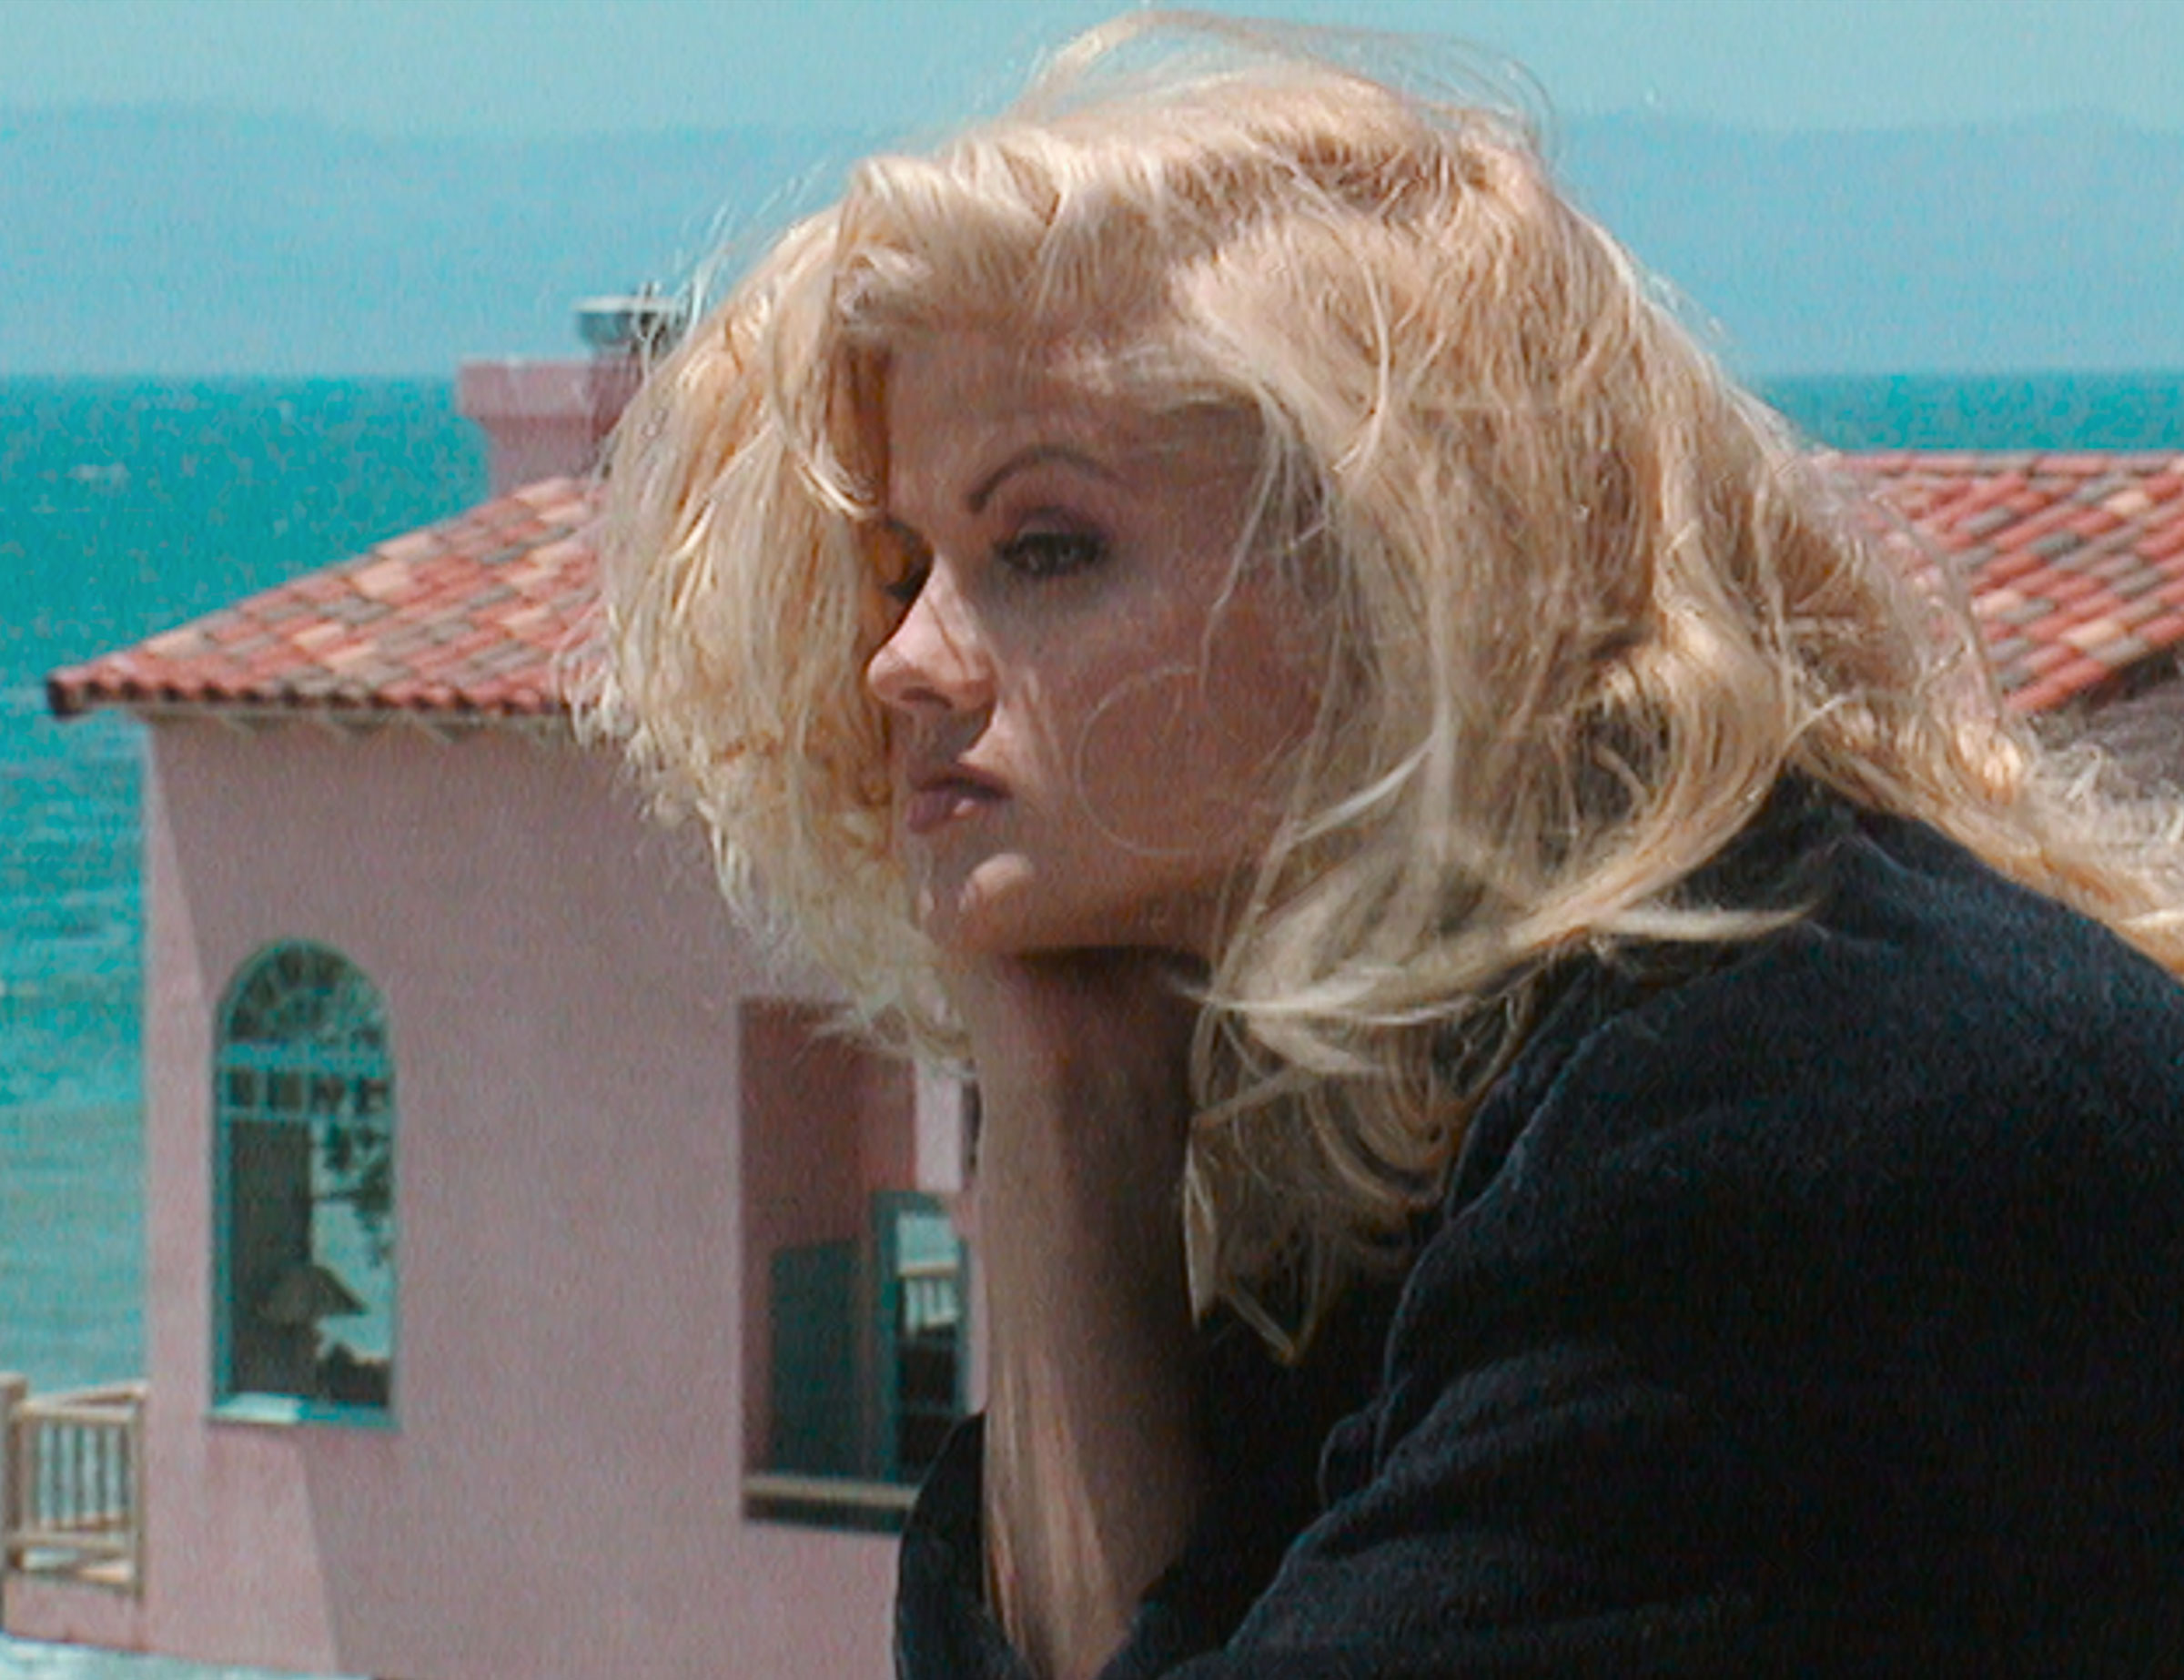 A still of Anna Nicole Smith from the new Netflix documentary. (Netflix)